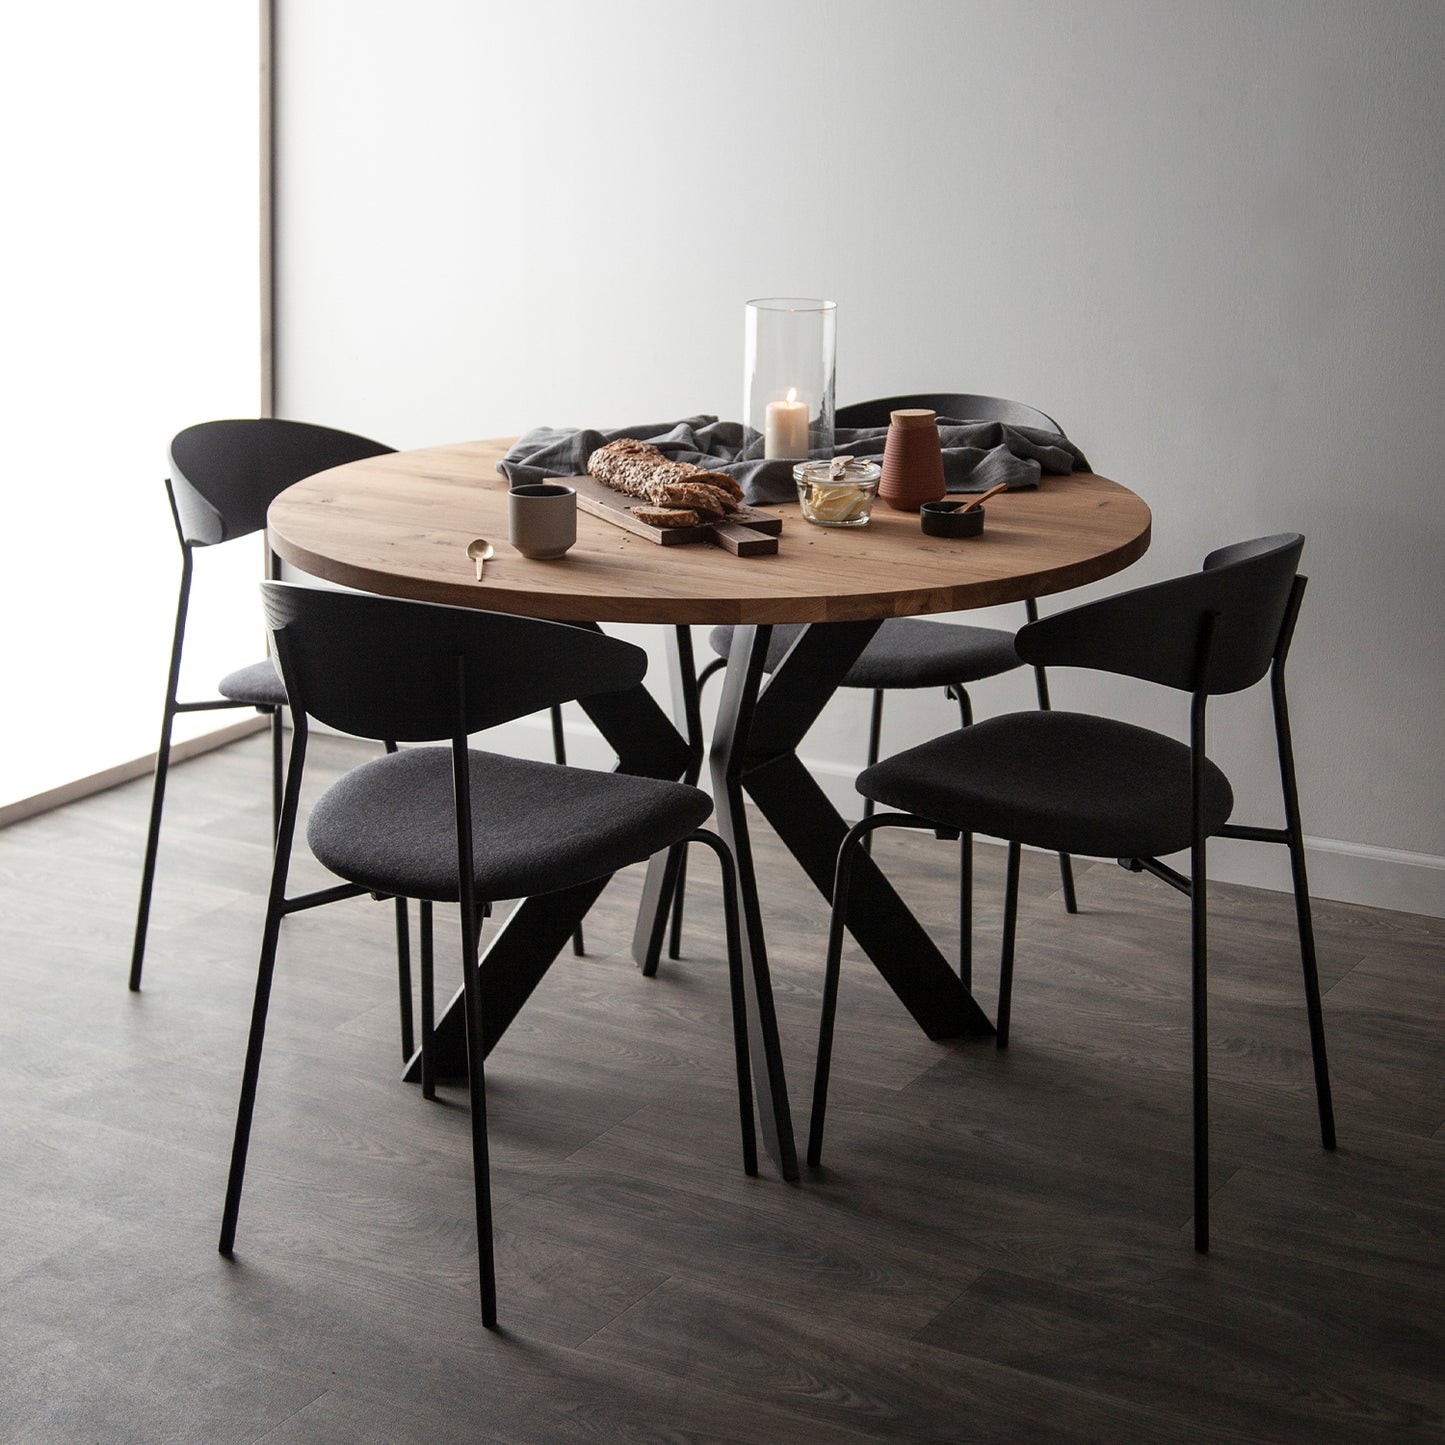 Elmhurst Oak Round Dining Table With Steel Base - Extending